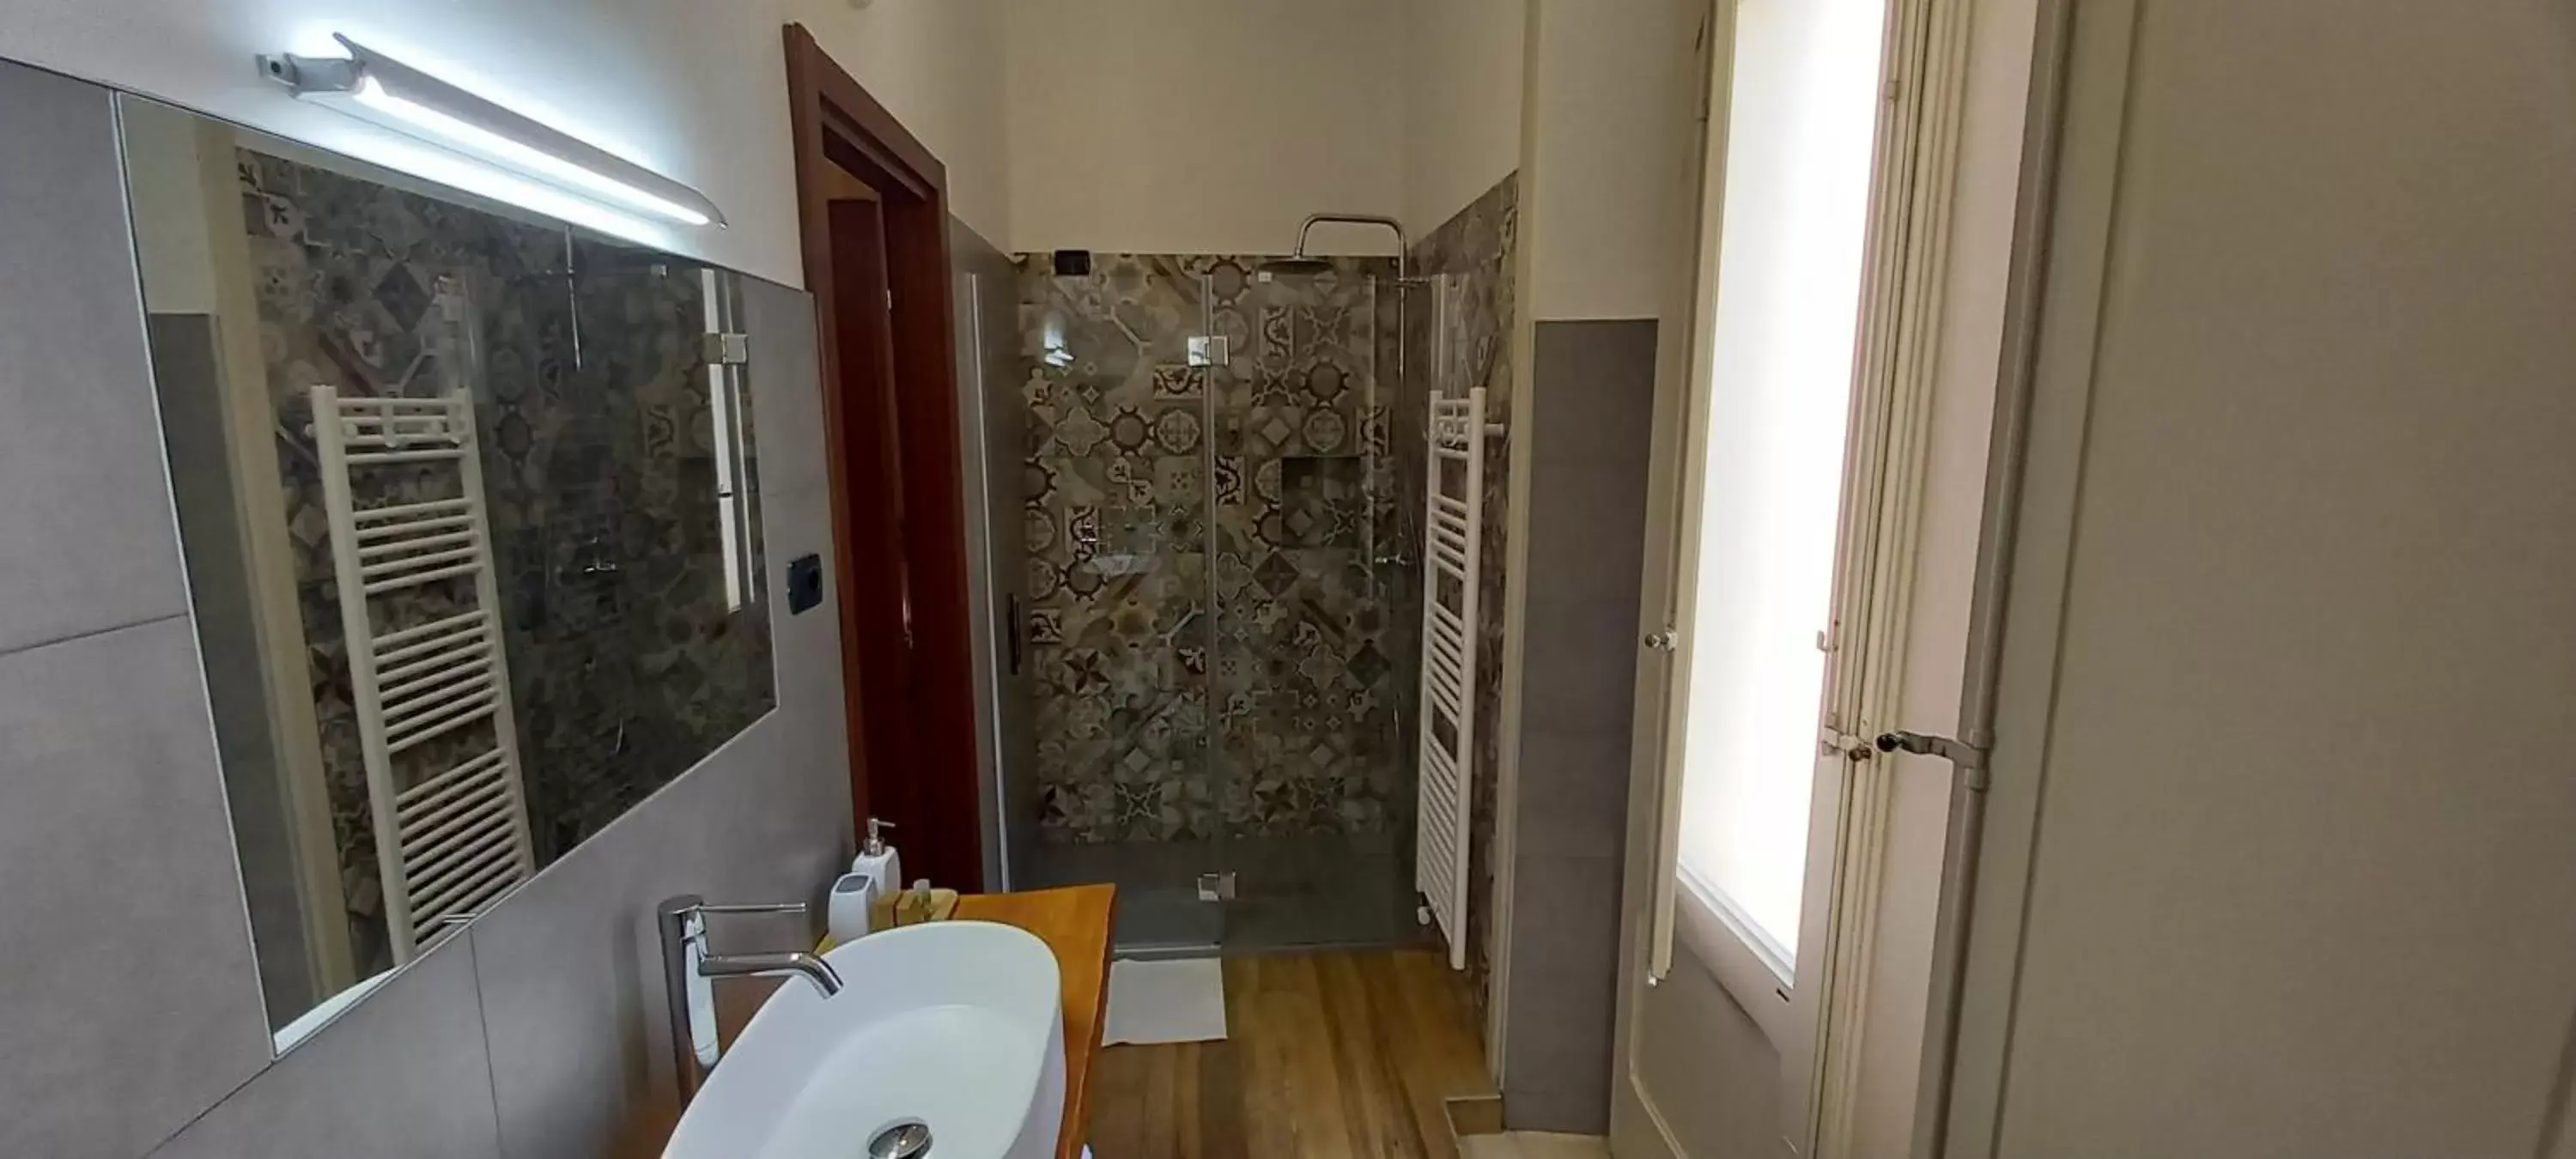 Bathroom in B&B Acanto Lecce